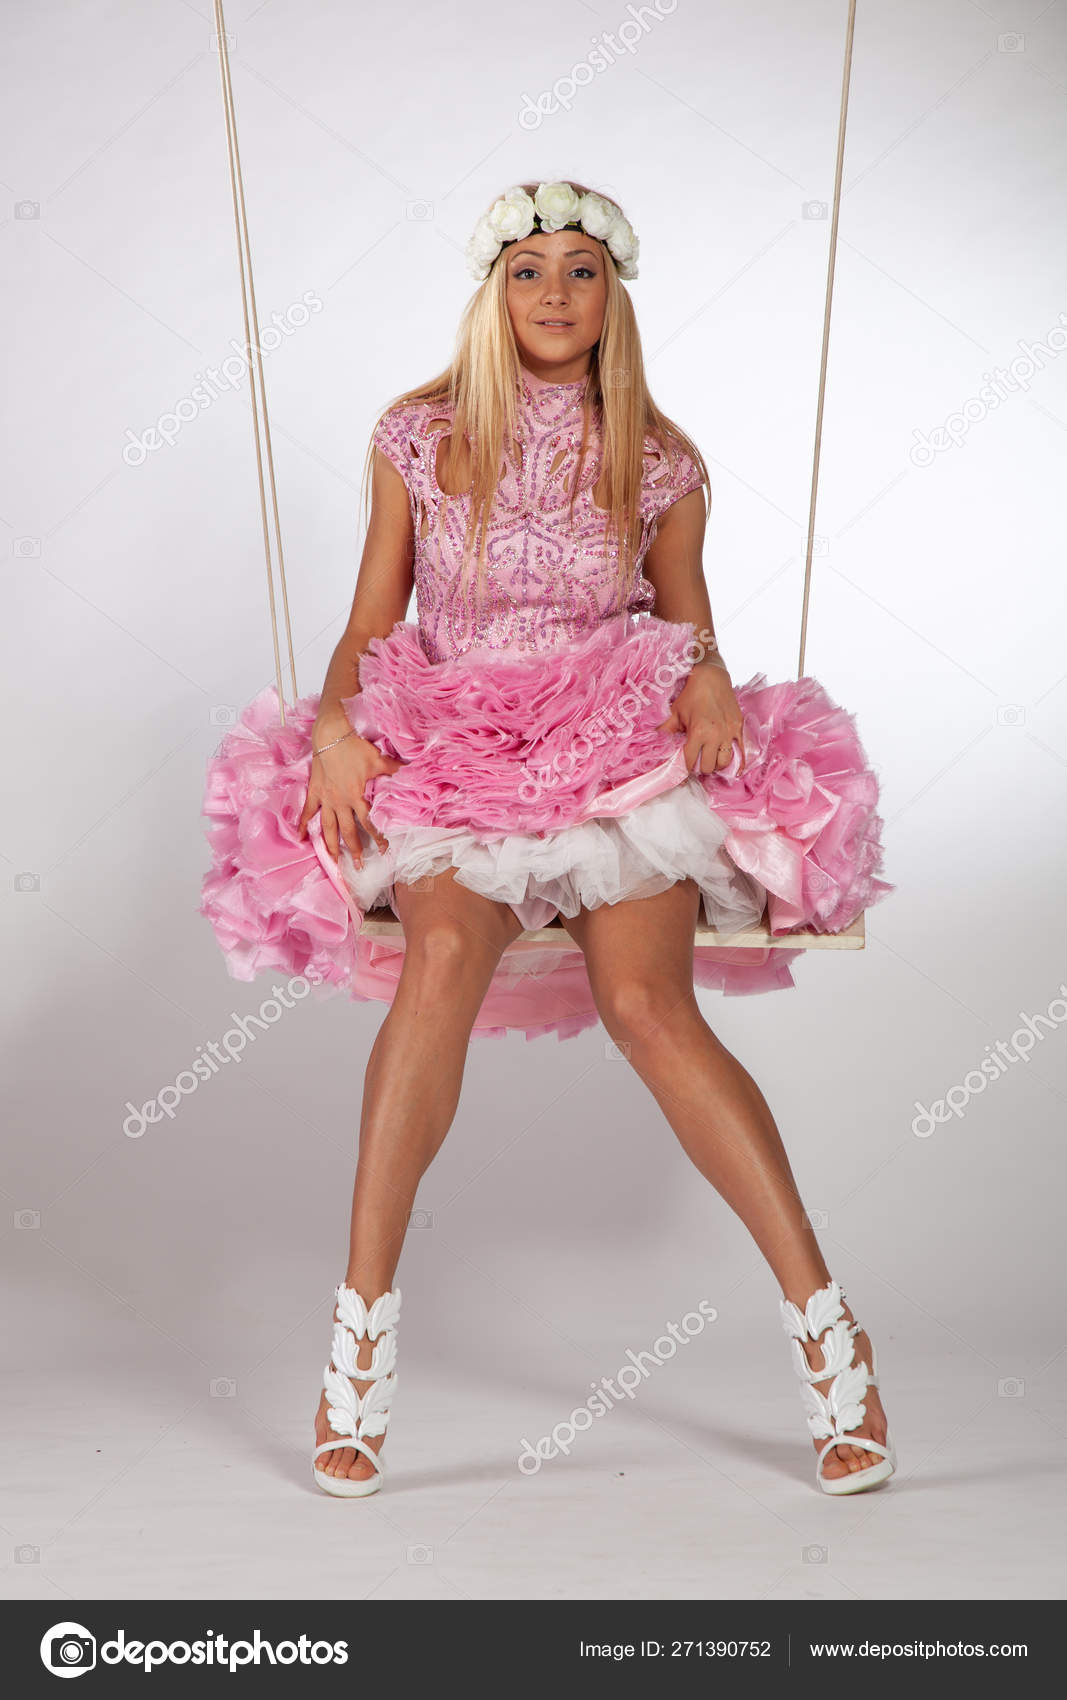 https://st4.depositphotos.com/10086424/27139/i/1600/depositphotos_271390752-stock-photo-girl-swinging-swing-studio-pink.jpg